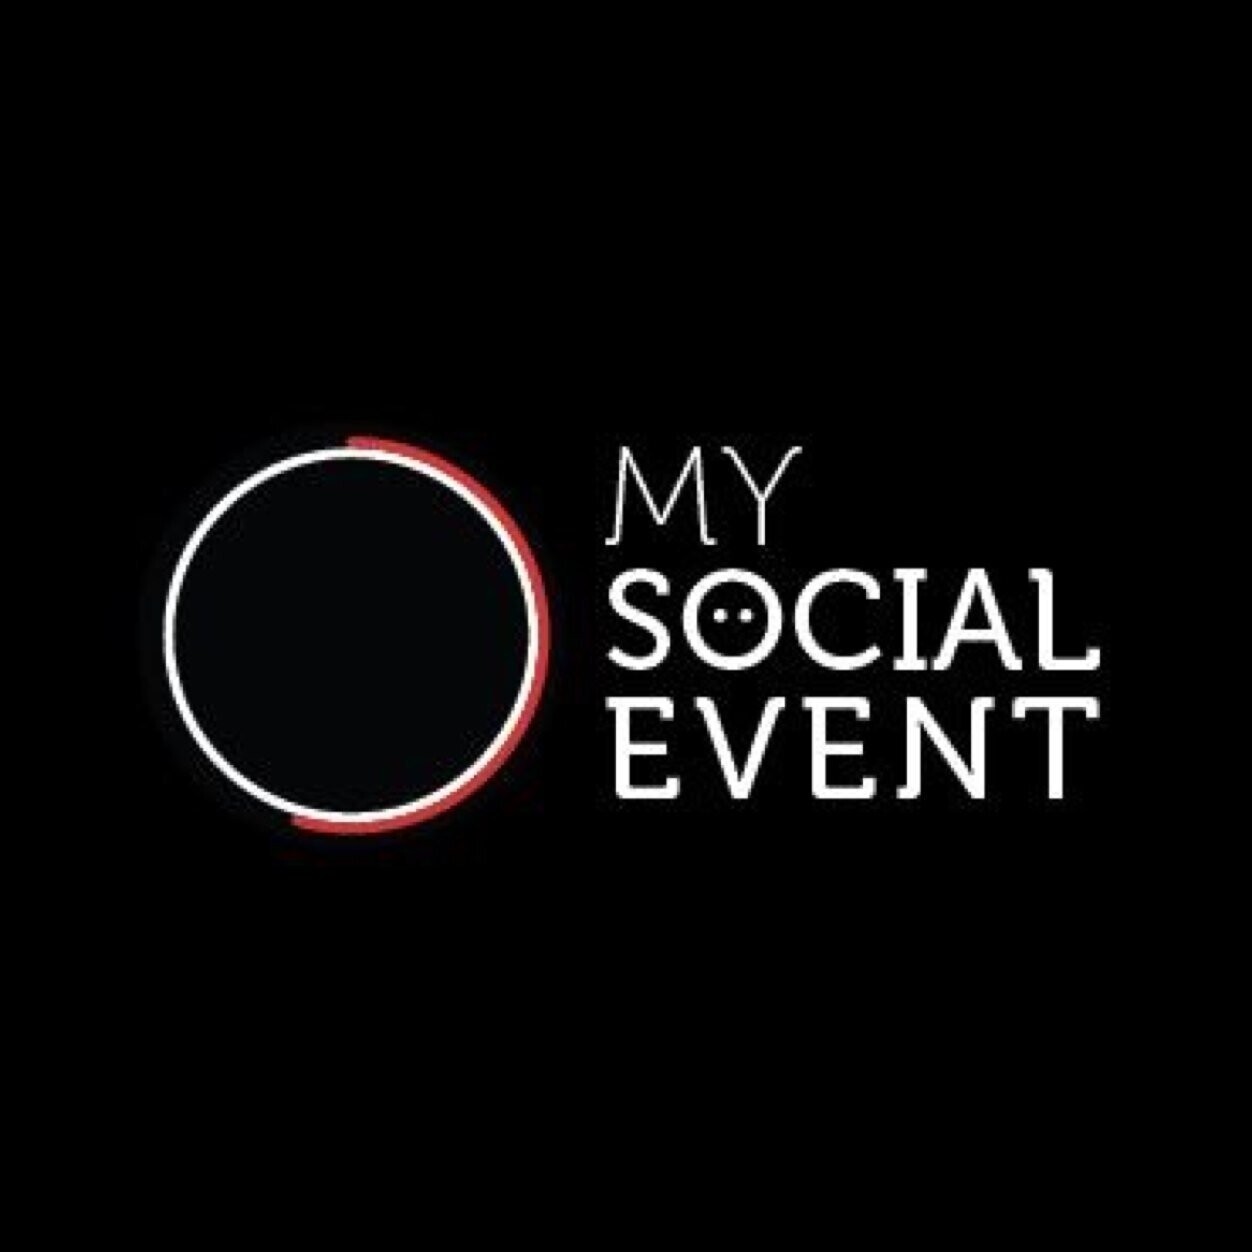 MY SOCIAL EVENT